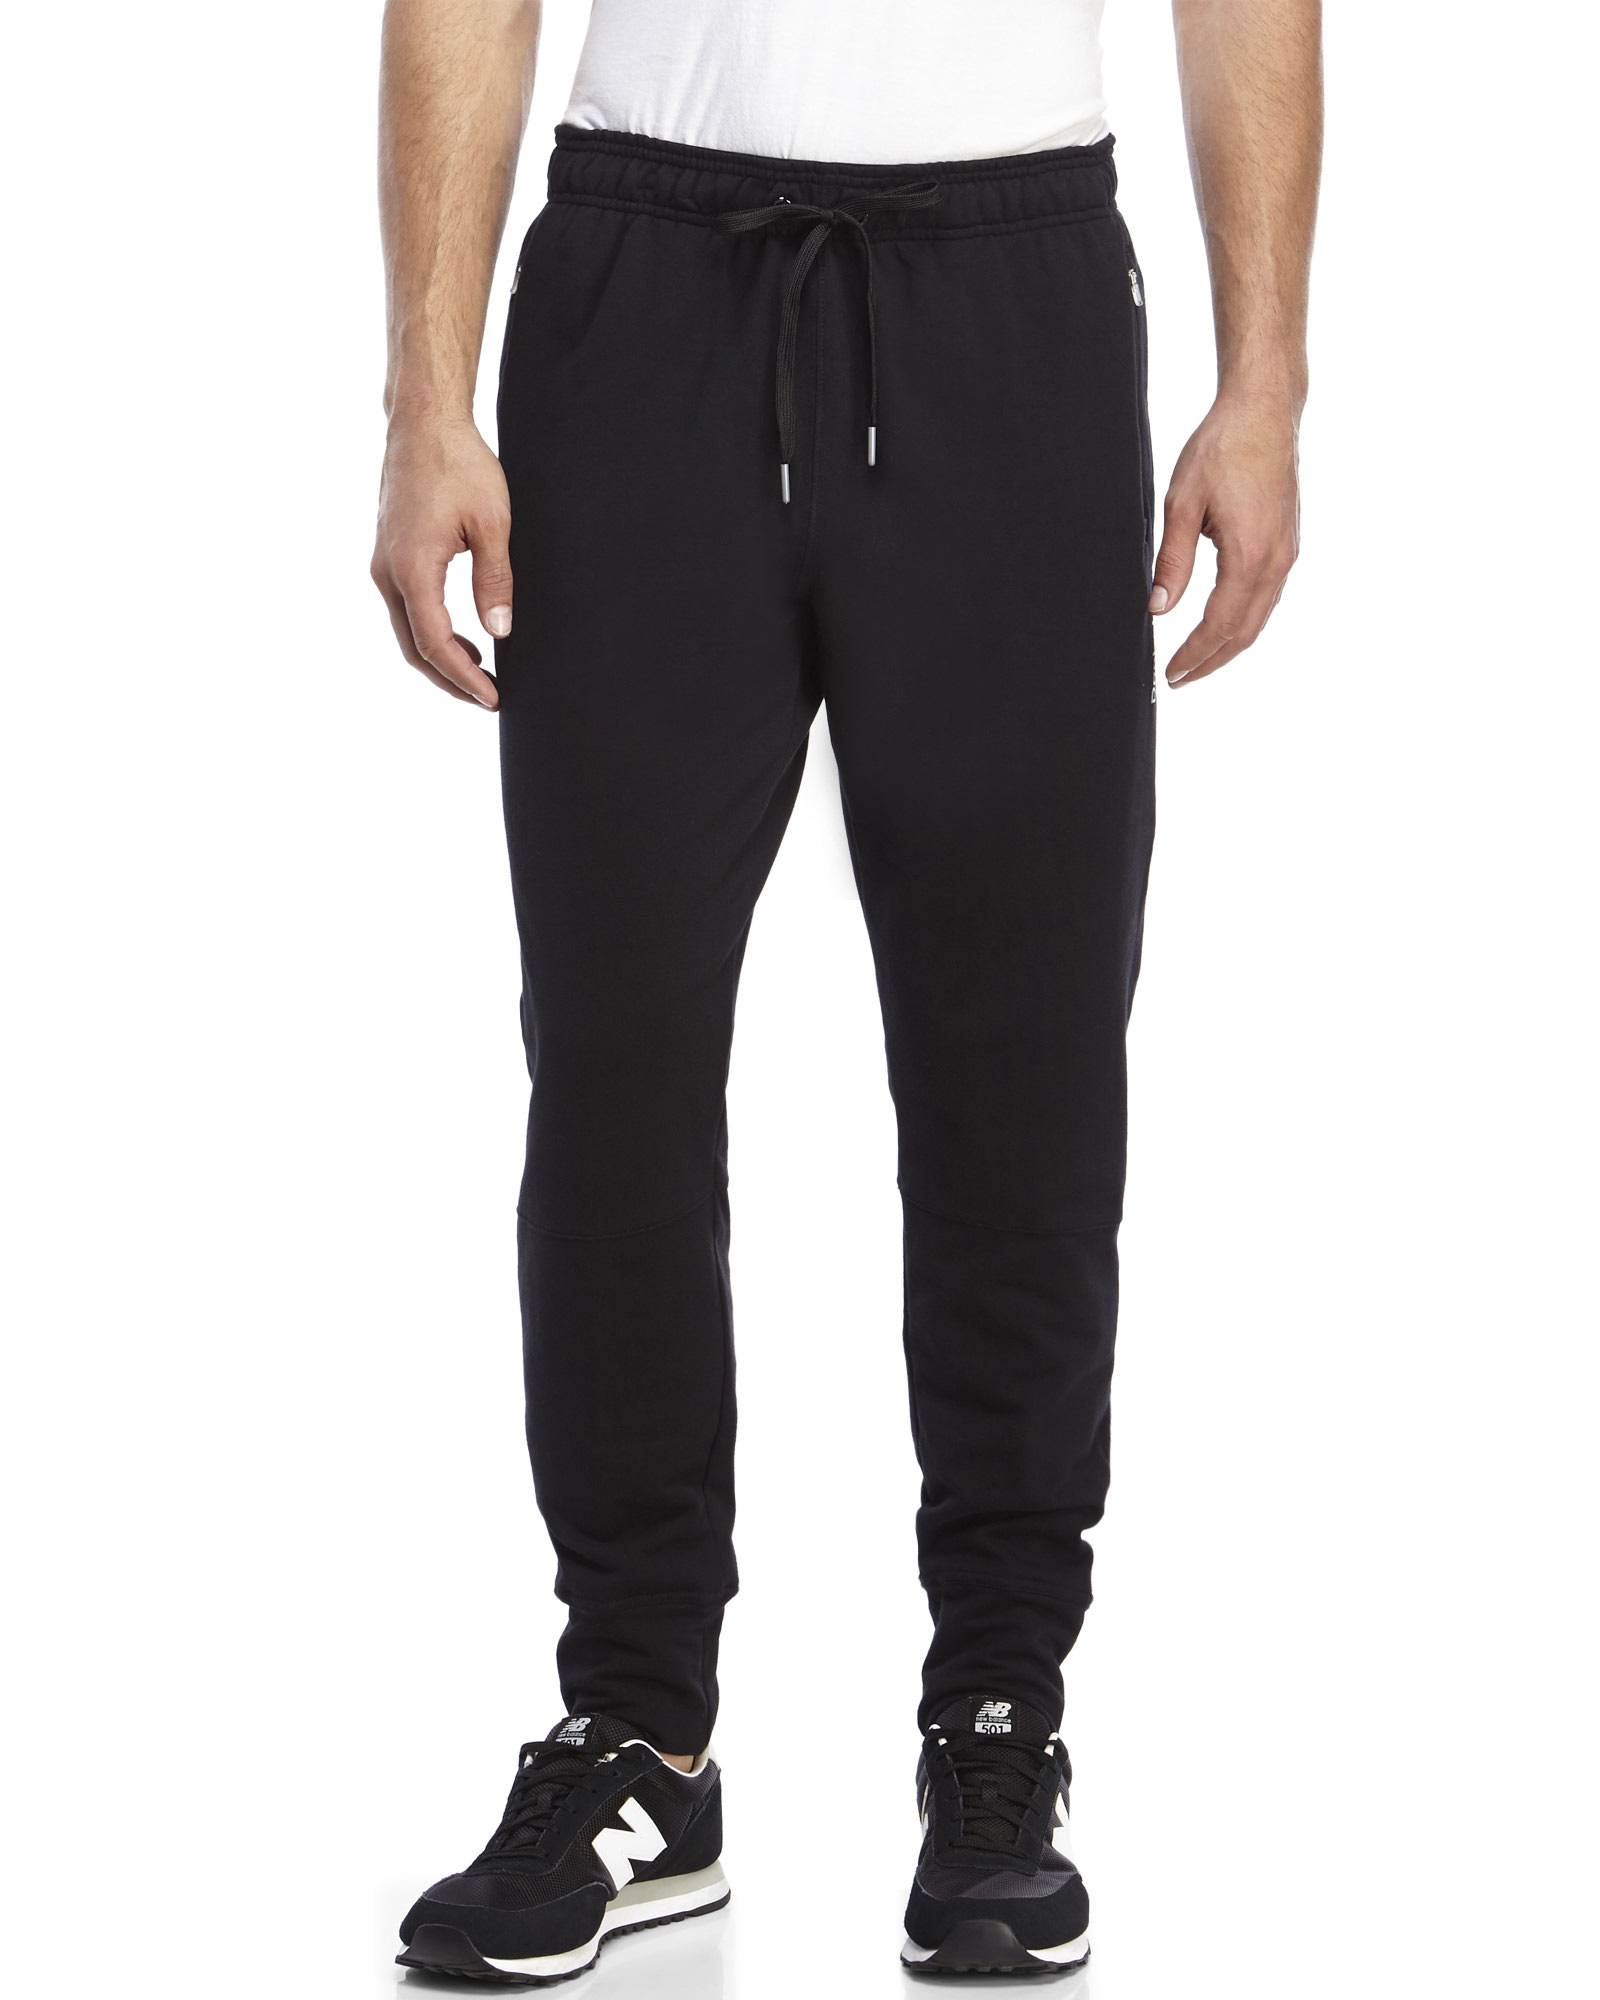 Lyst - Reebok Zip Pocket Sweatpants in Black for Men